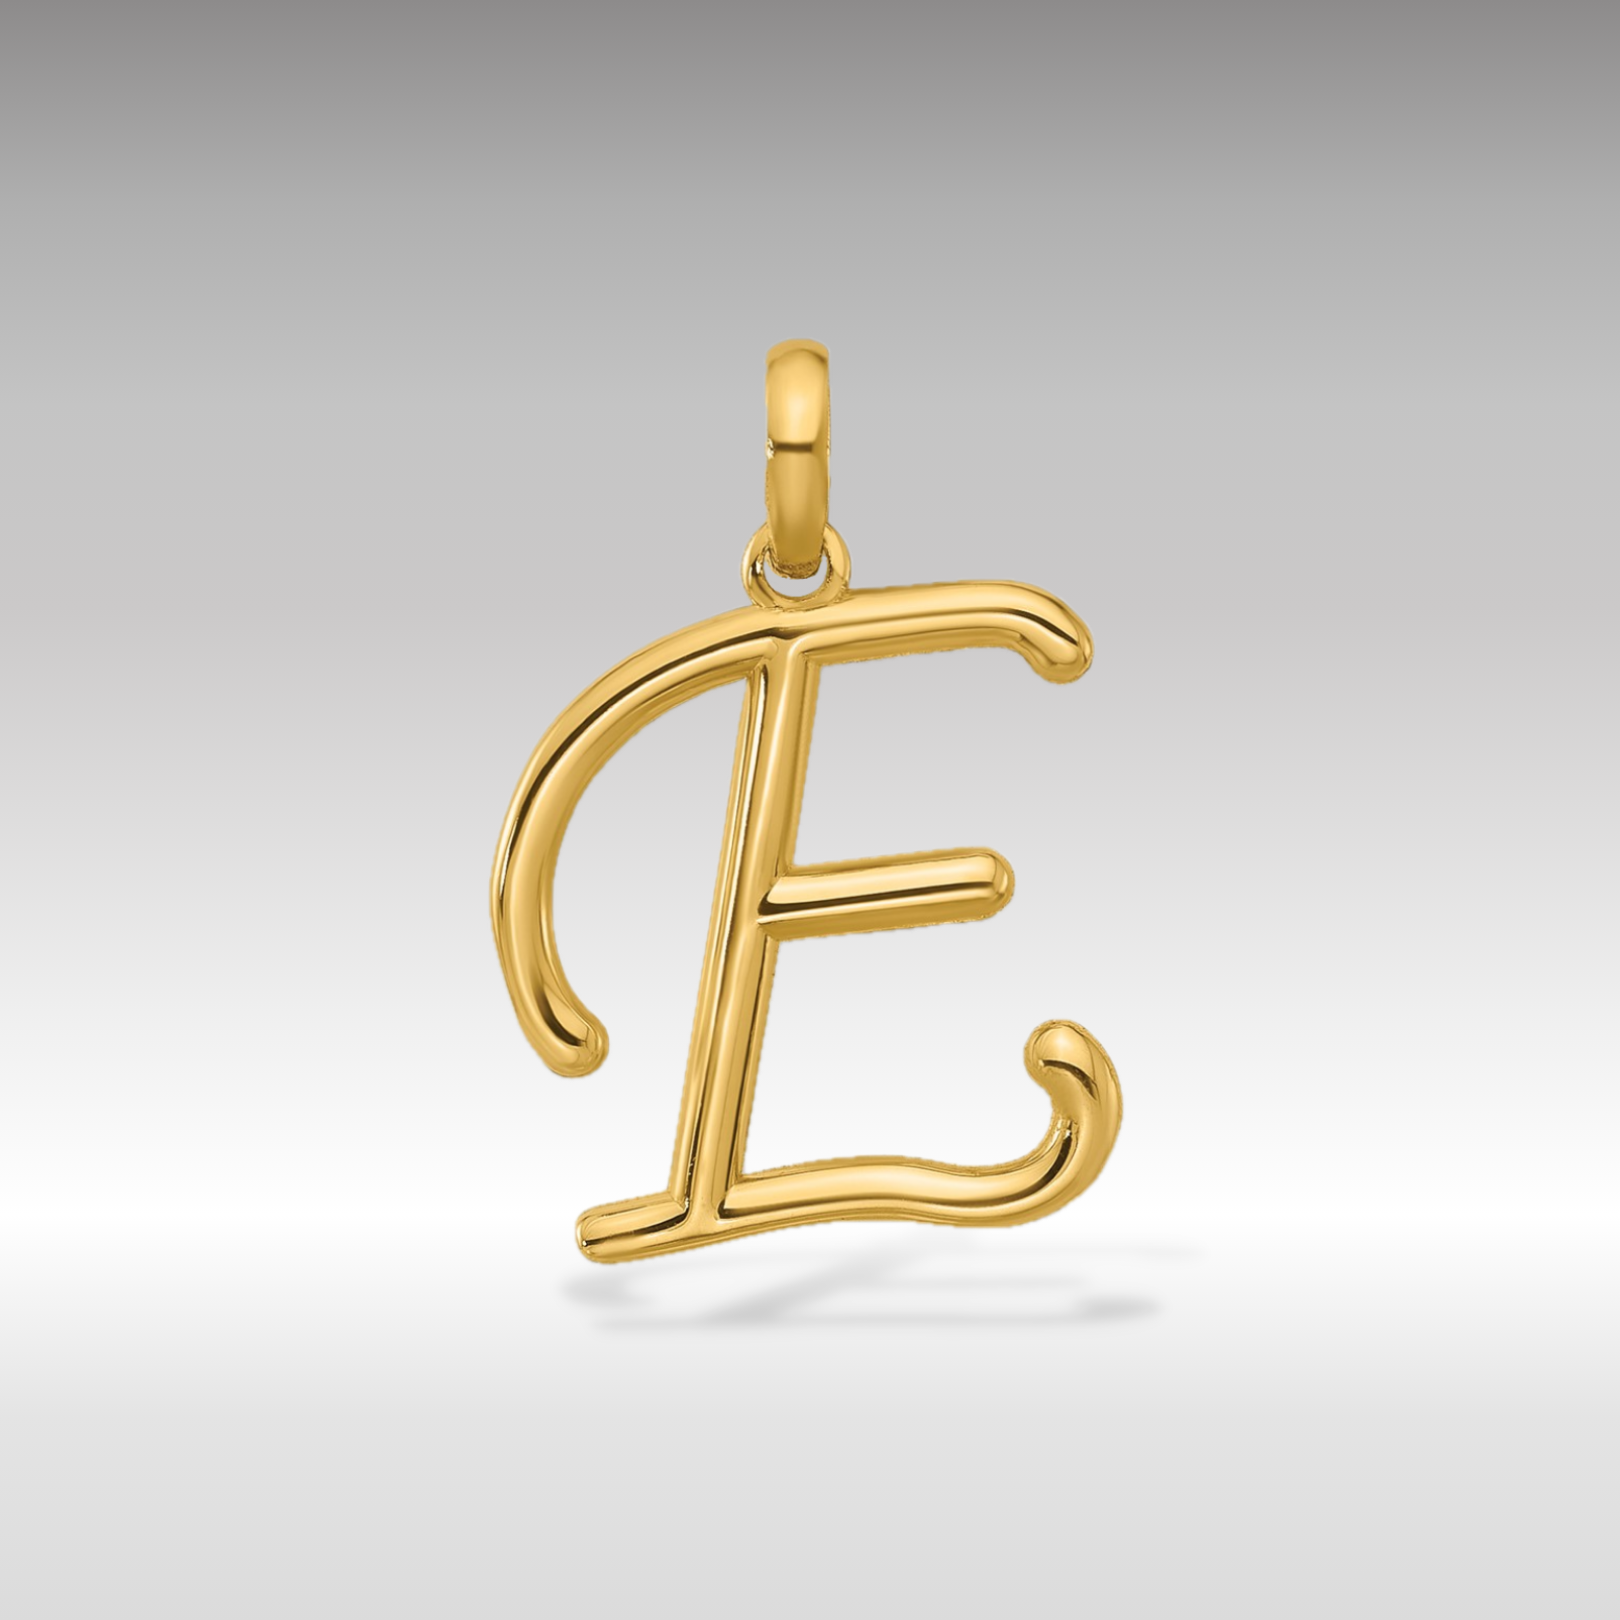 14K Gold Fancy Letter 'E' Charm Pendant - Charlie & Co. Jewelry